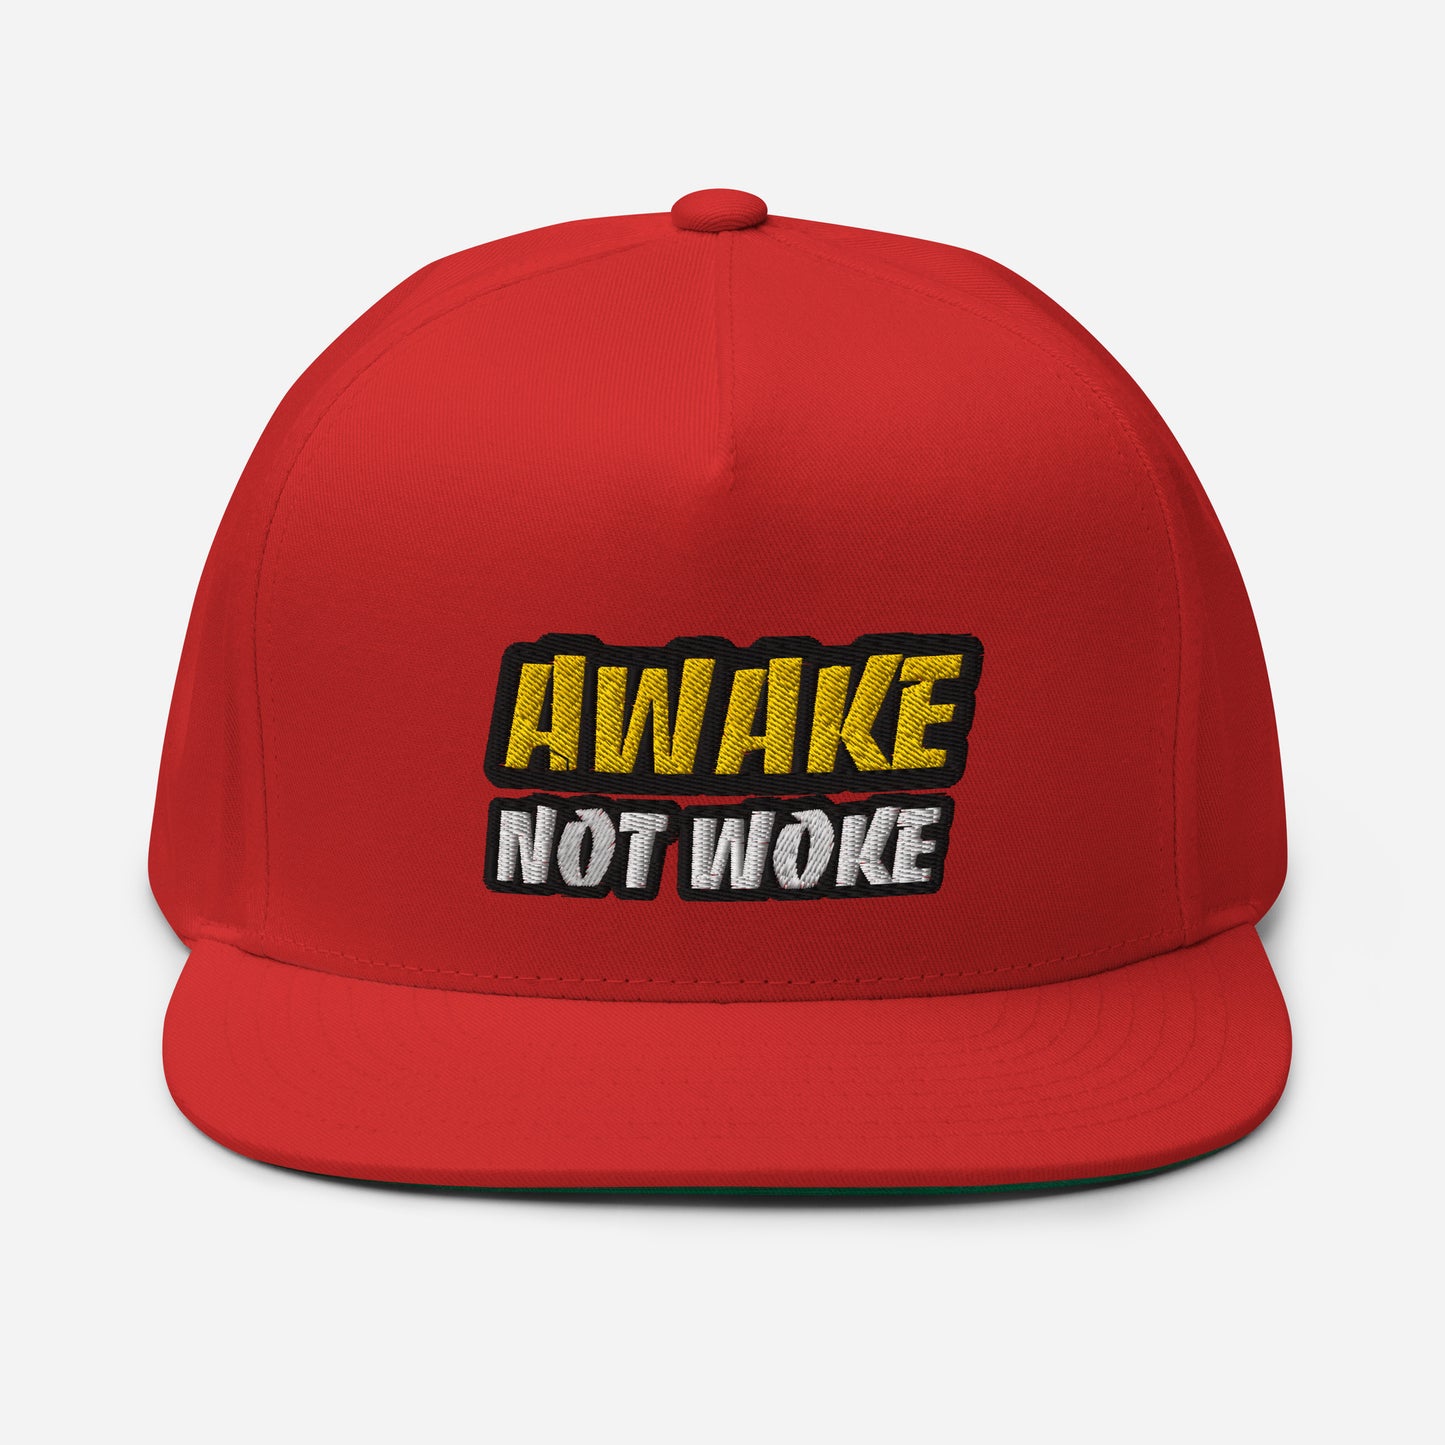 Awake Not Woke Unisex Baseball Cap: The Perfect Anti-Socialist Accessory for Those Who Value Individualism and Critical Thinking